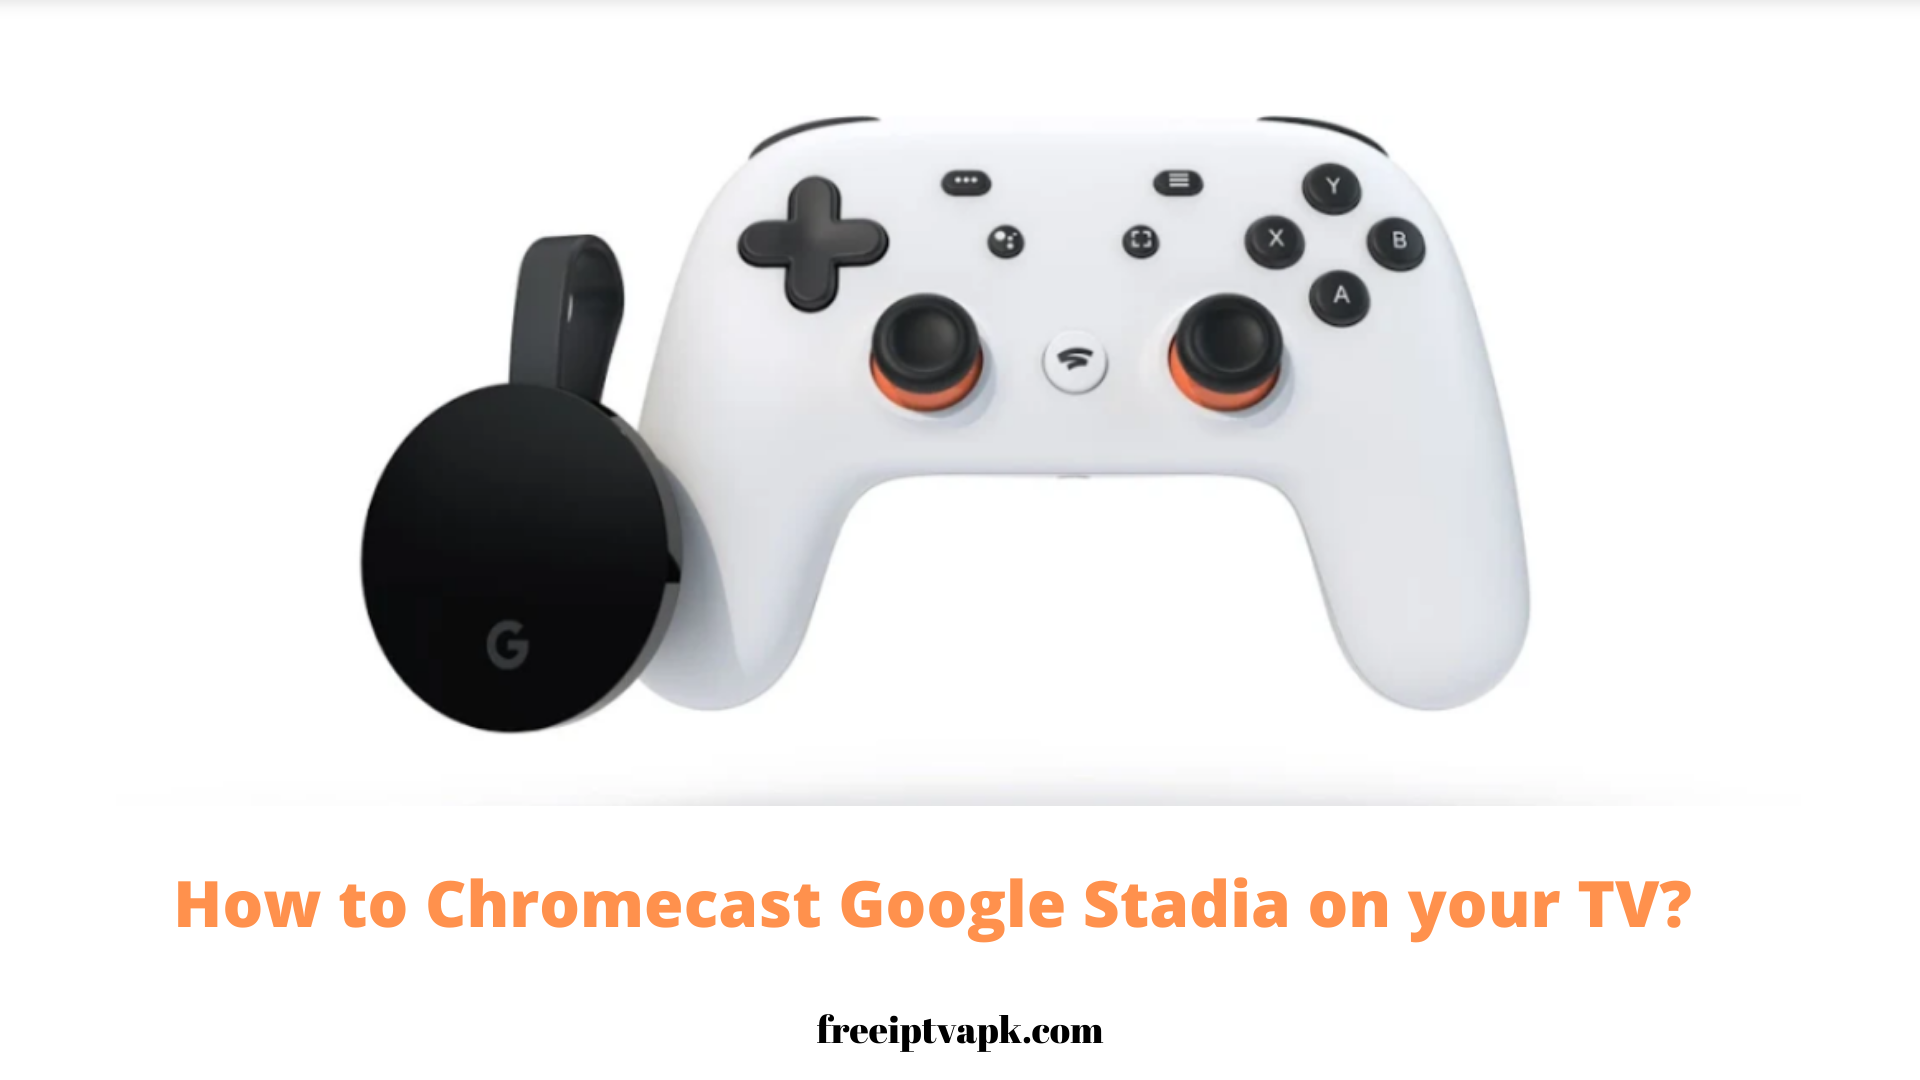 Chromecast Google stadia